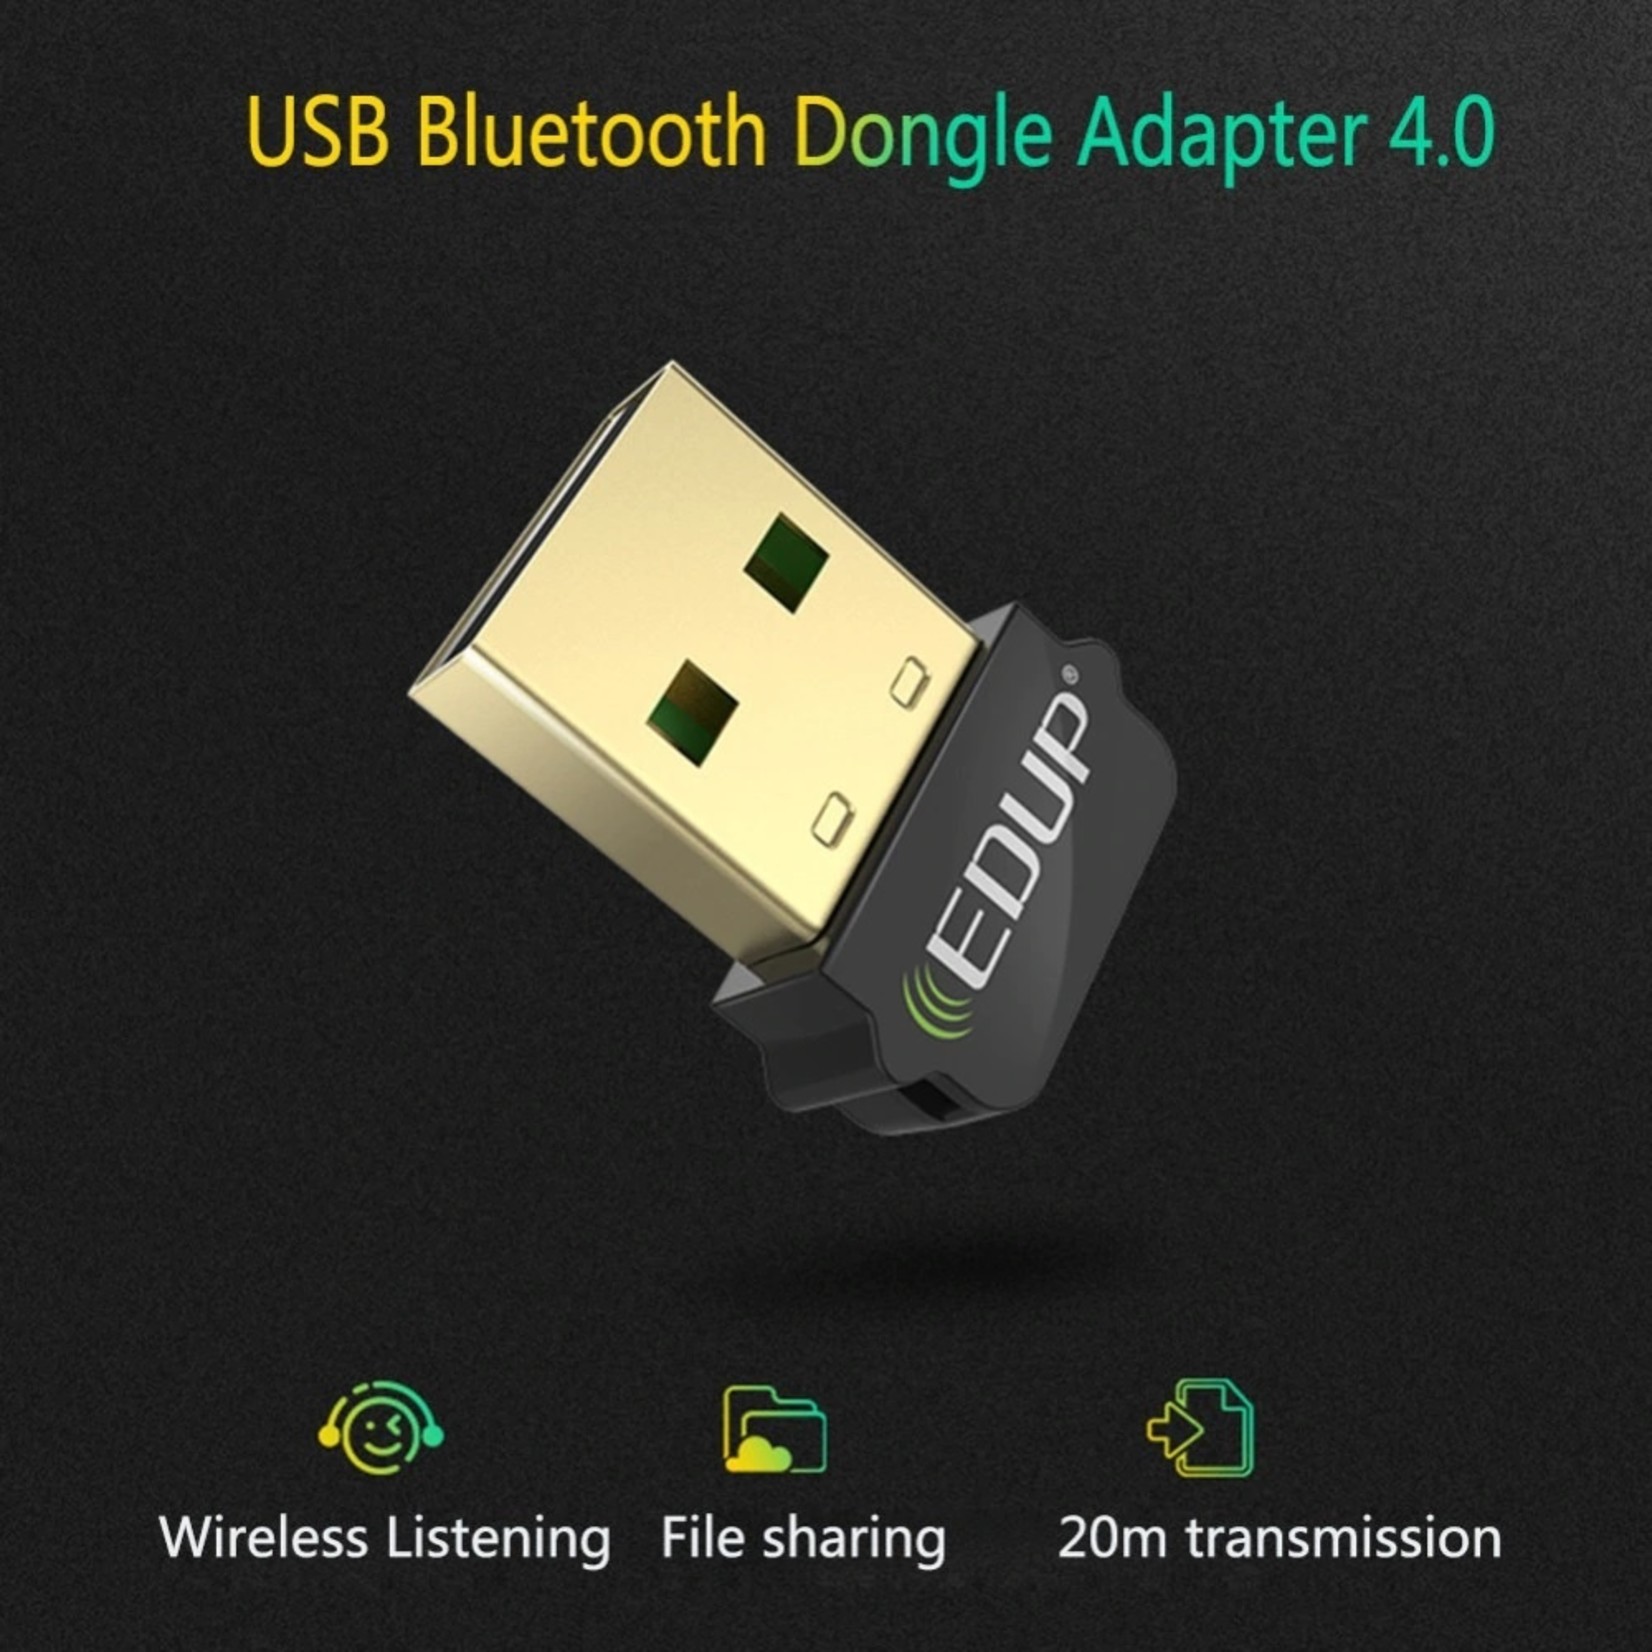 EDUP Bluetooth dongle - USB Bluetooth 4.0 Adapter - 20m